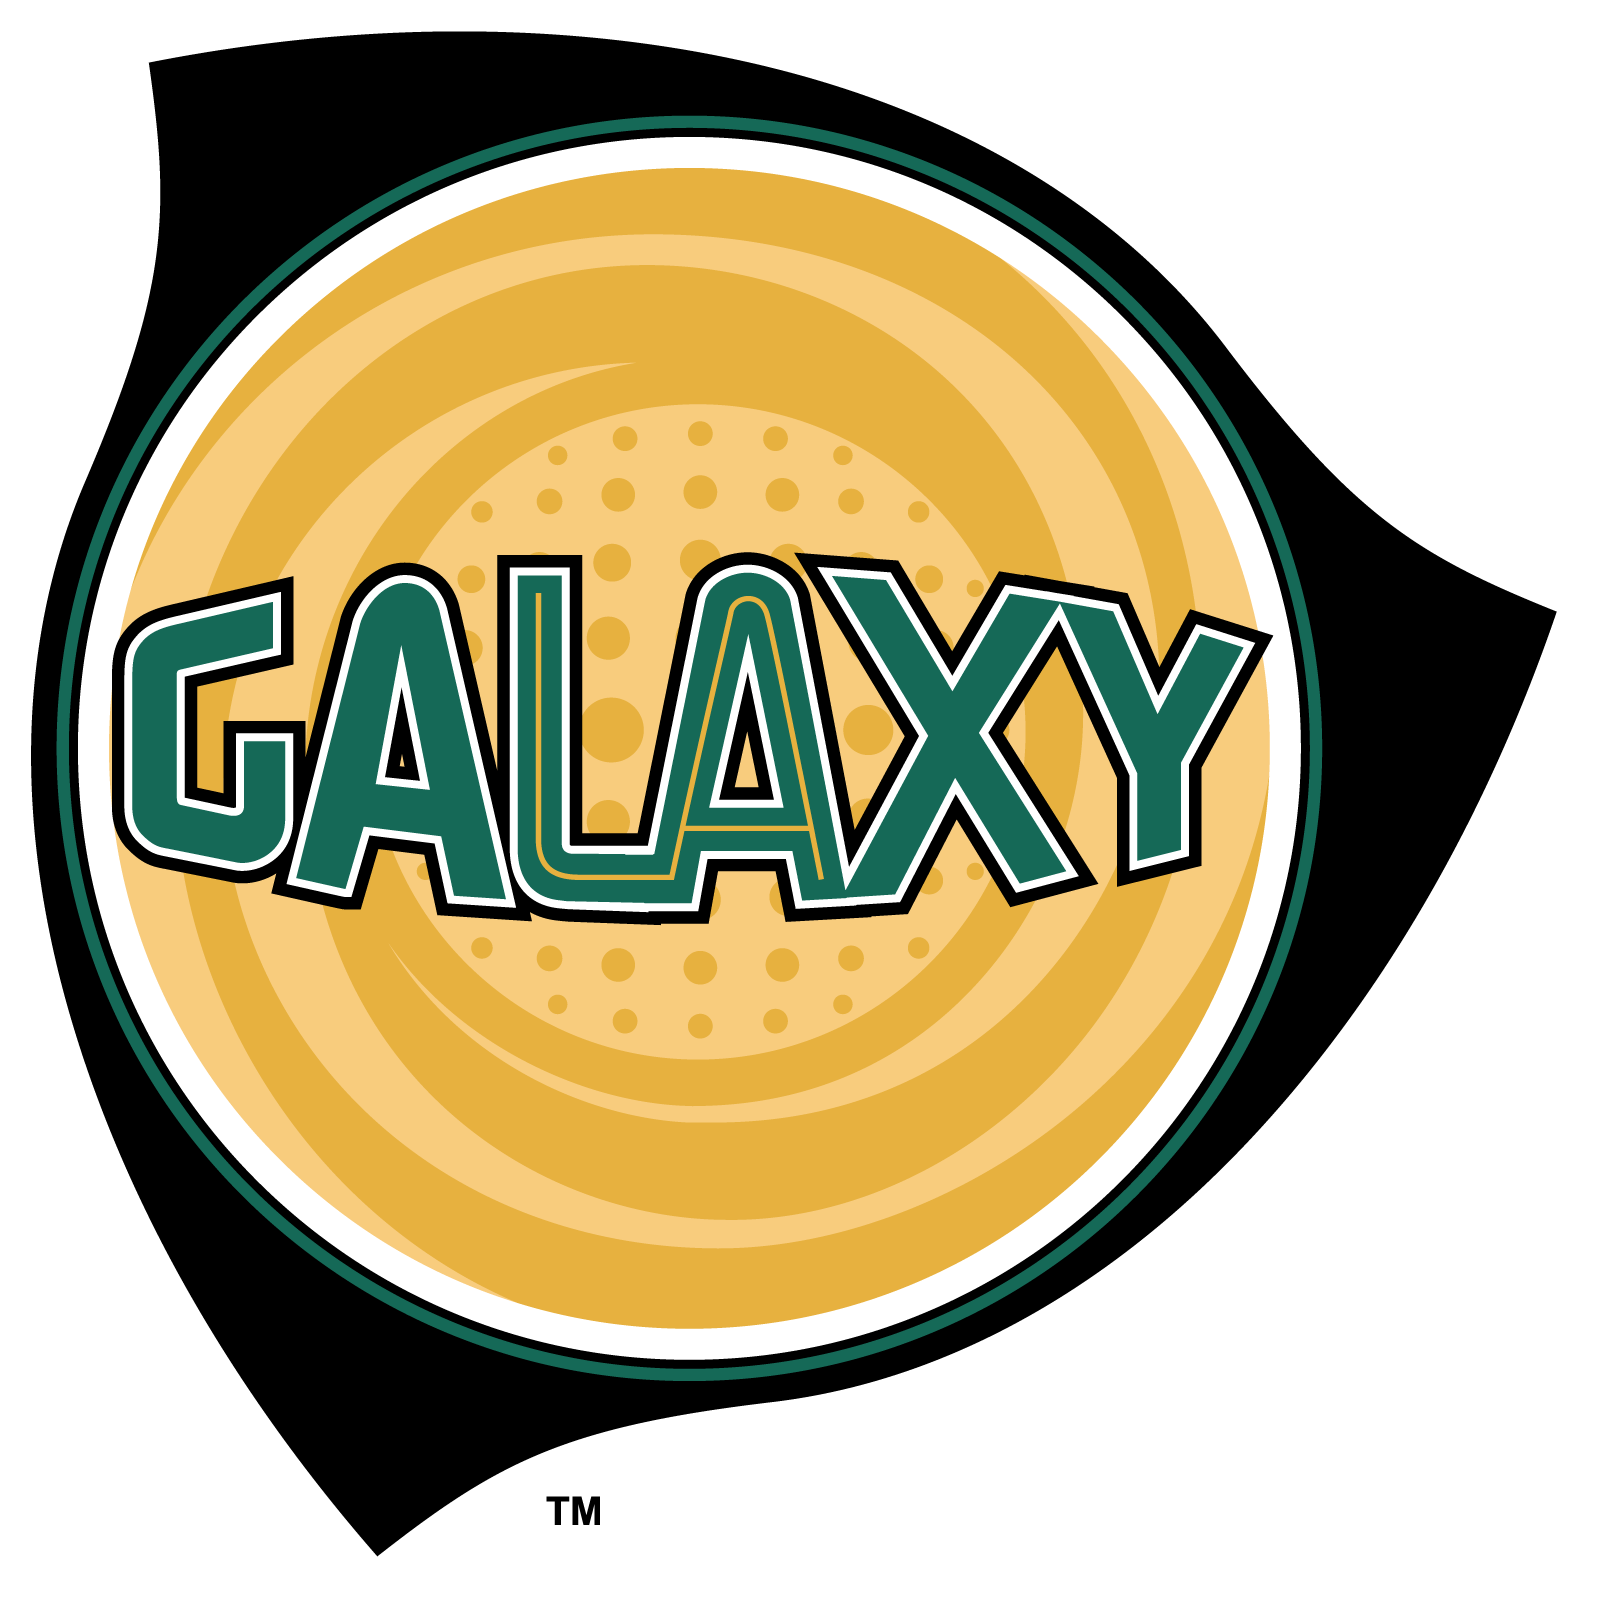 La Galaxy Png Download Image - La Galaxy (1597x1600), Png Download